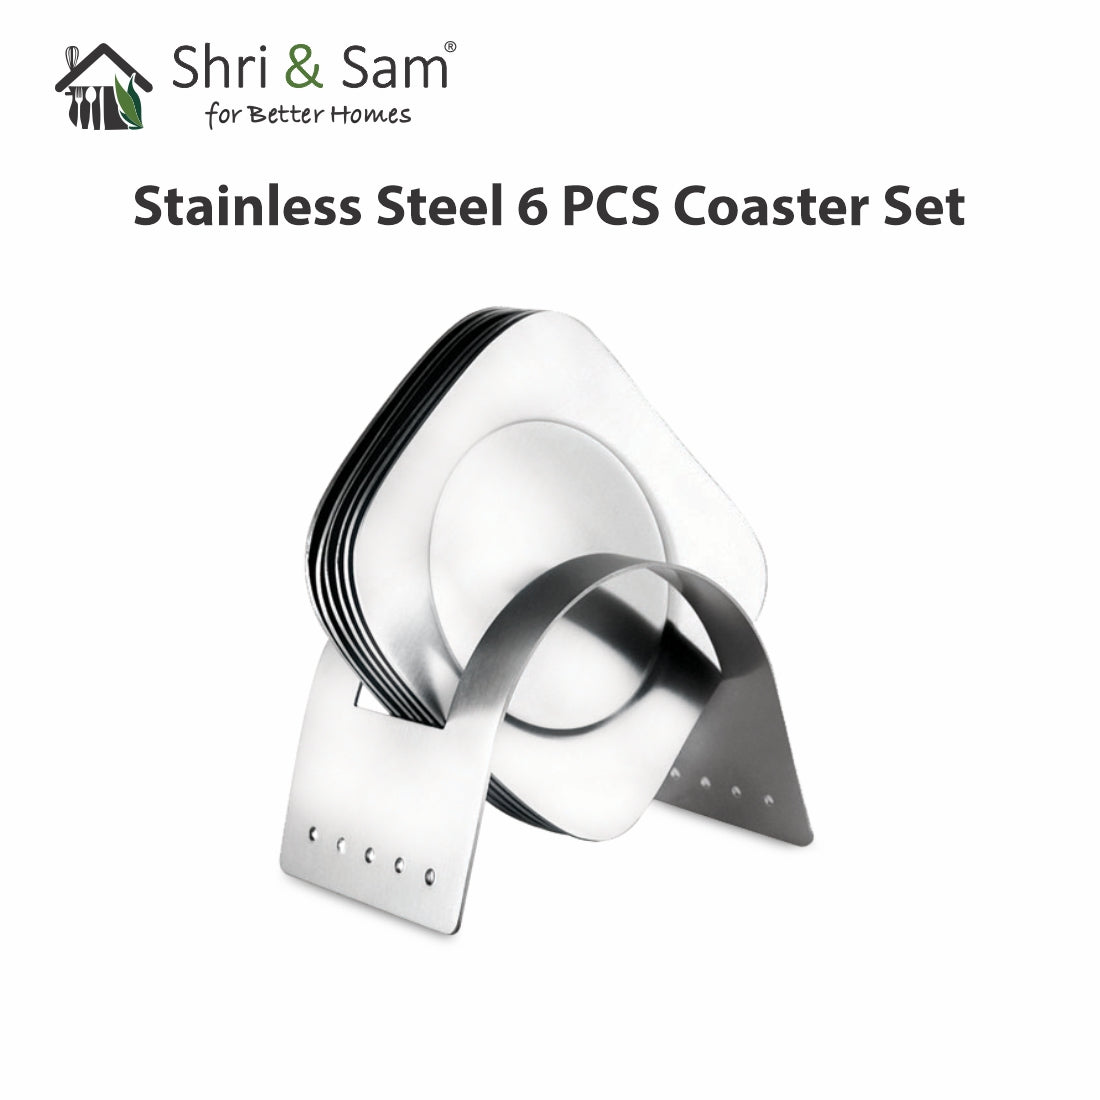 Stainless Steel 6 PCS Coaster Set